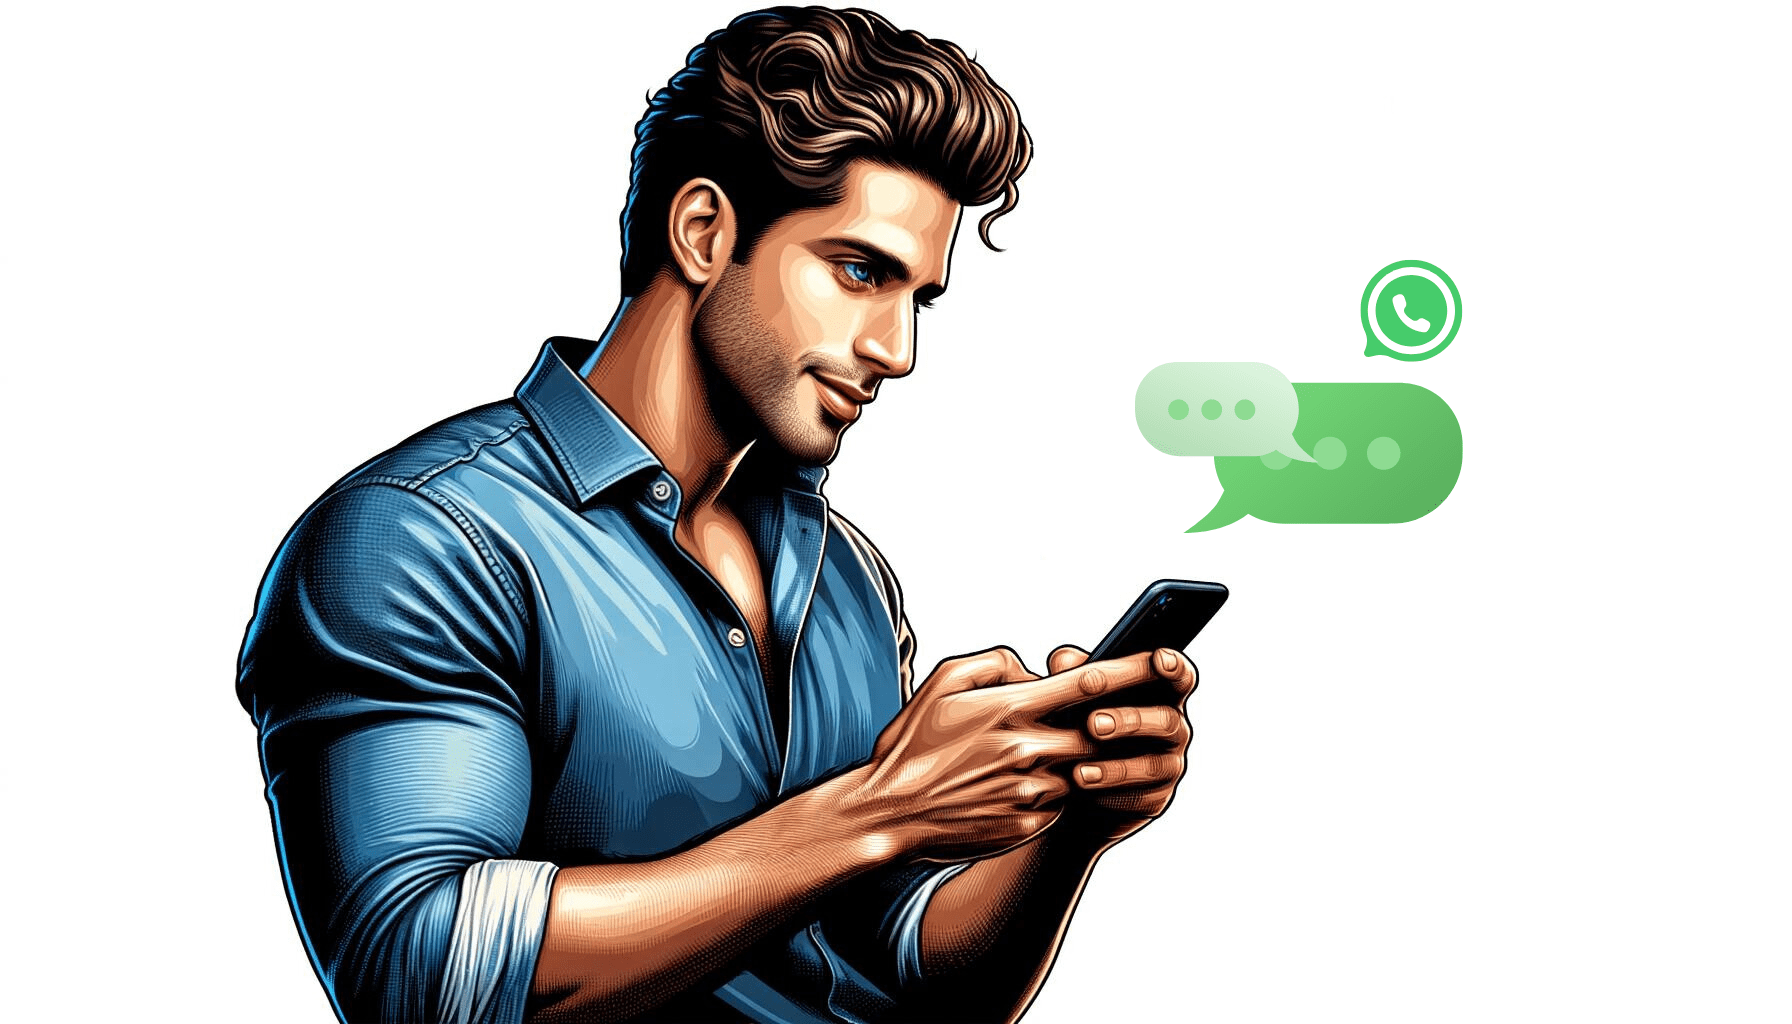 How to Flirt With Girls on WhatsApp